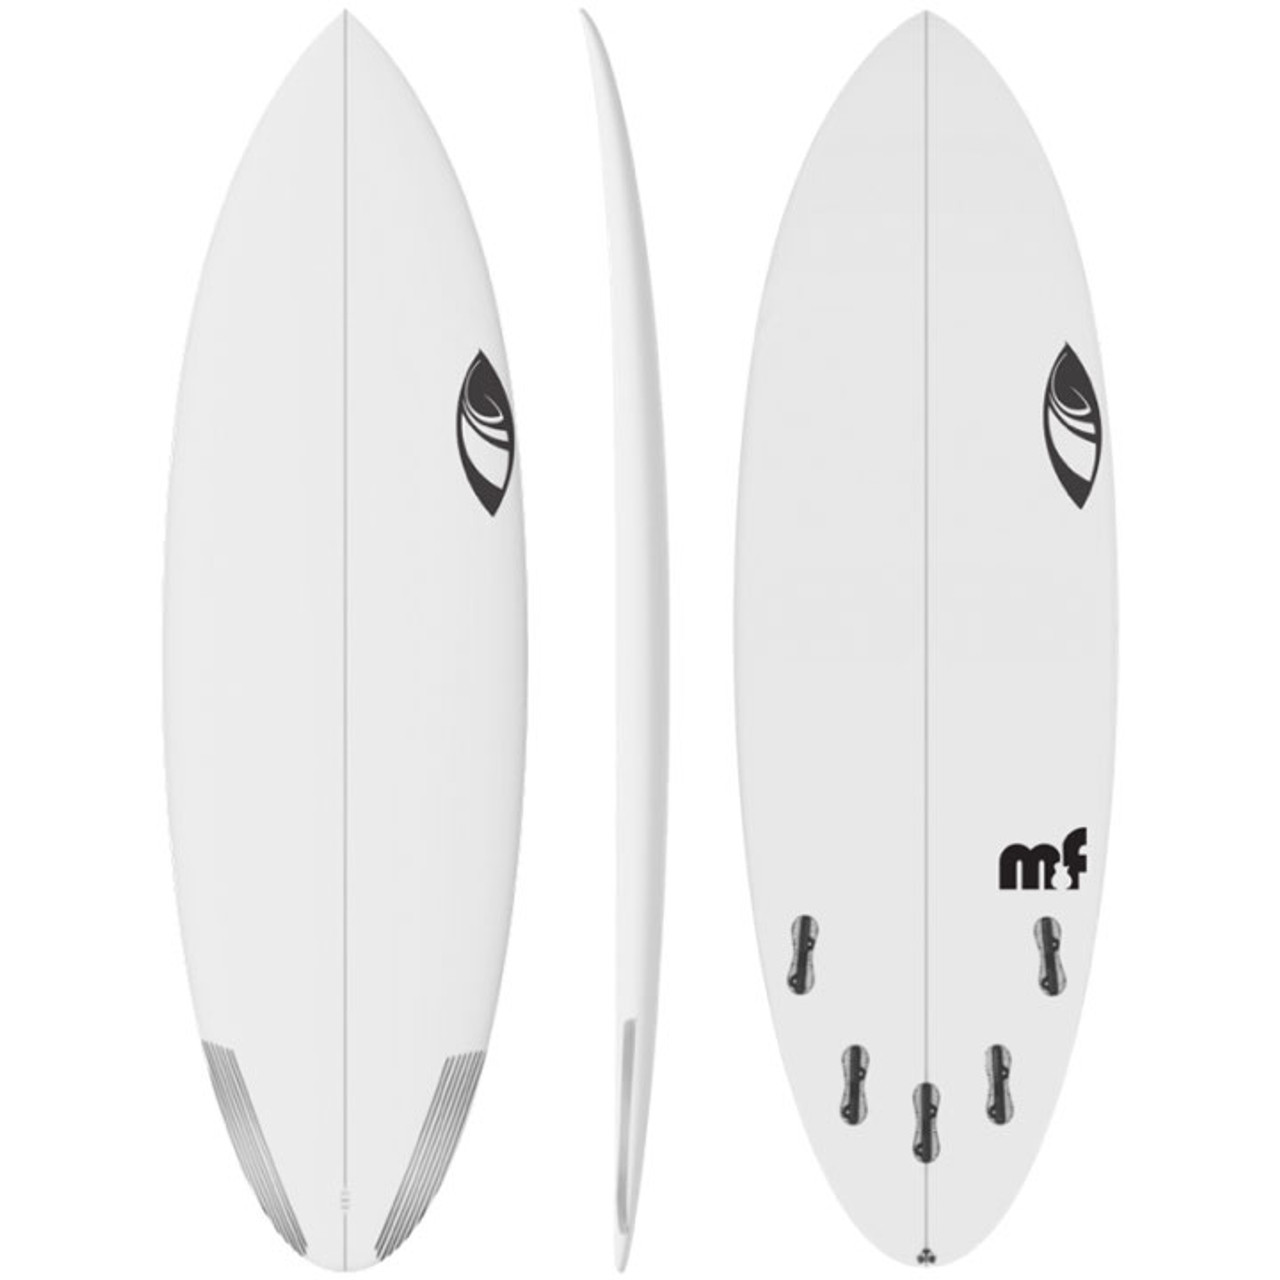 Sharp_Eye_Surfboards MF Surfboard Shortboard__39762